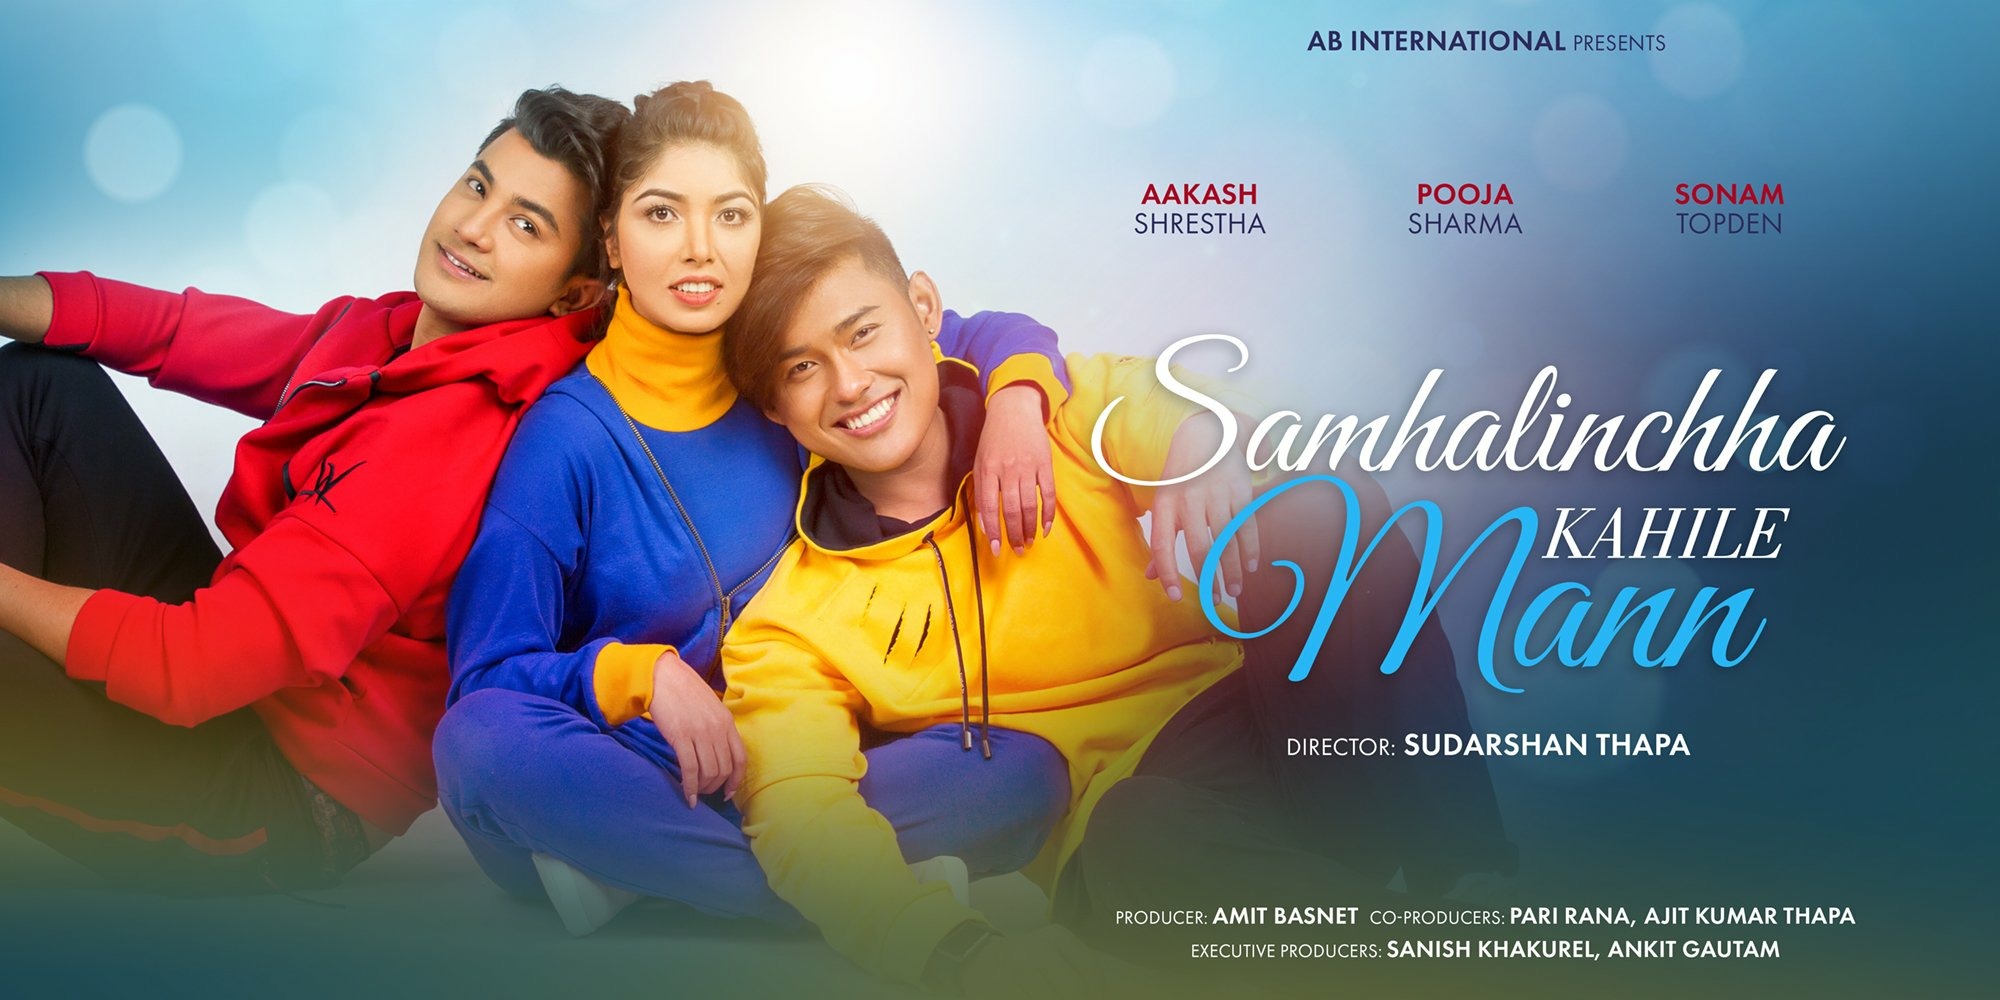 Mega Sized Movie Poster Image for Samhalinchha Kahile Mann. 